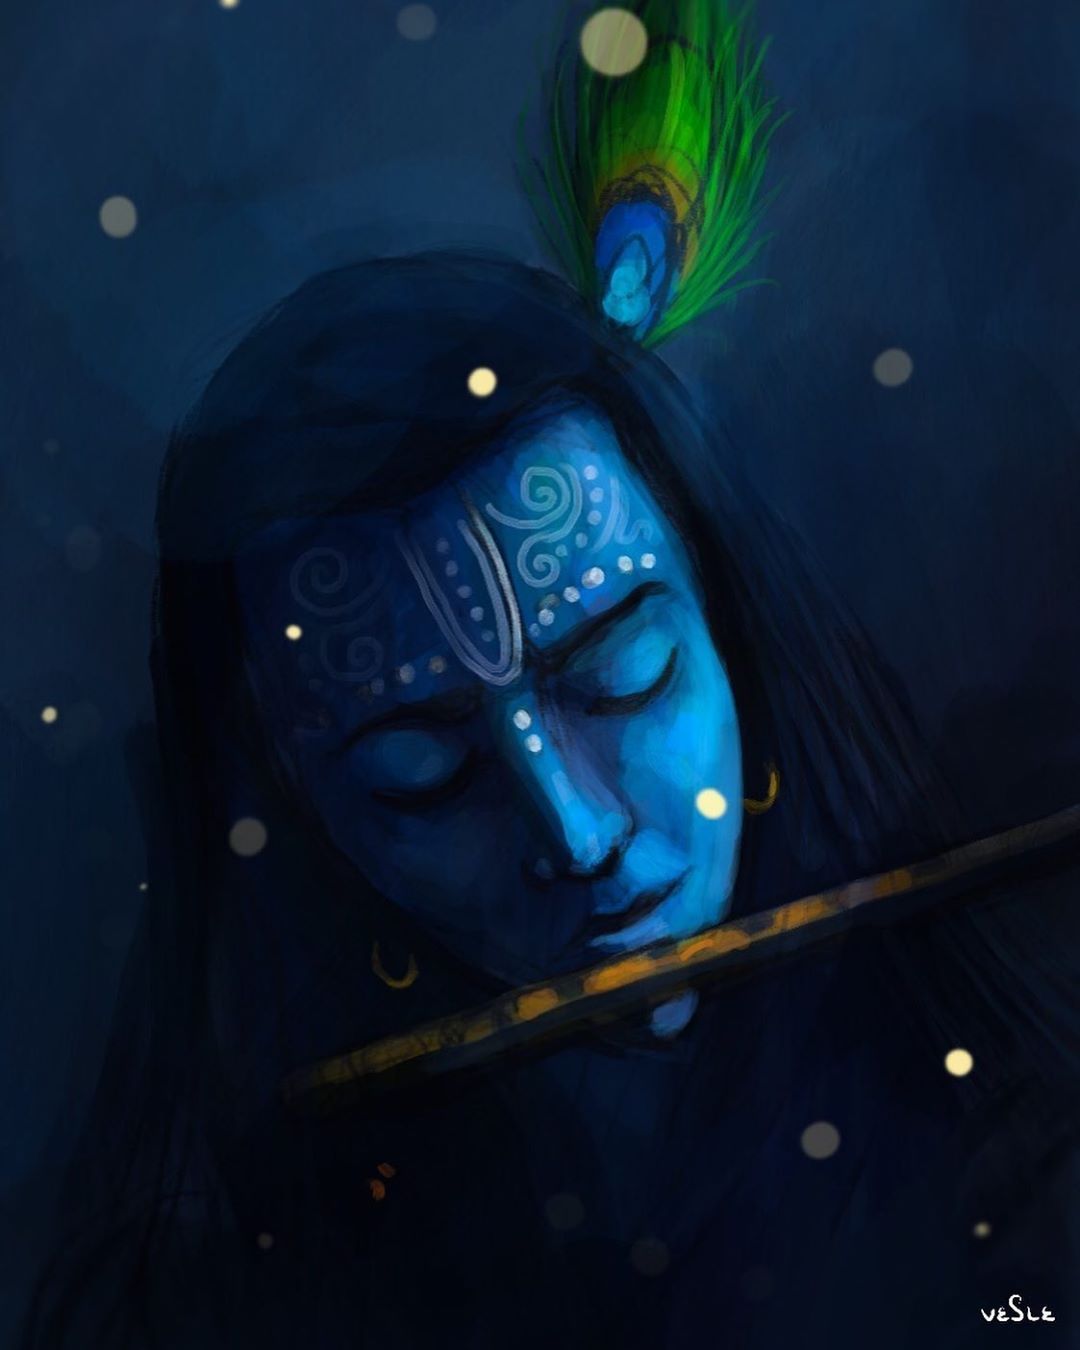 Vijendra singh vesle on Instagram: “Krishna #procreate #art #artist #artwork #paint #painting #paintin. Krishna art, Lord krishna HD wallpaper, God illustrations